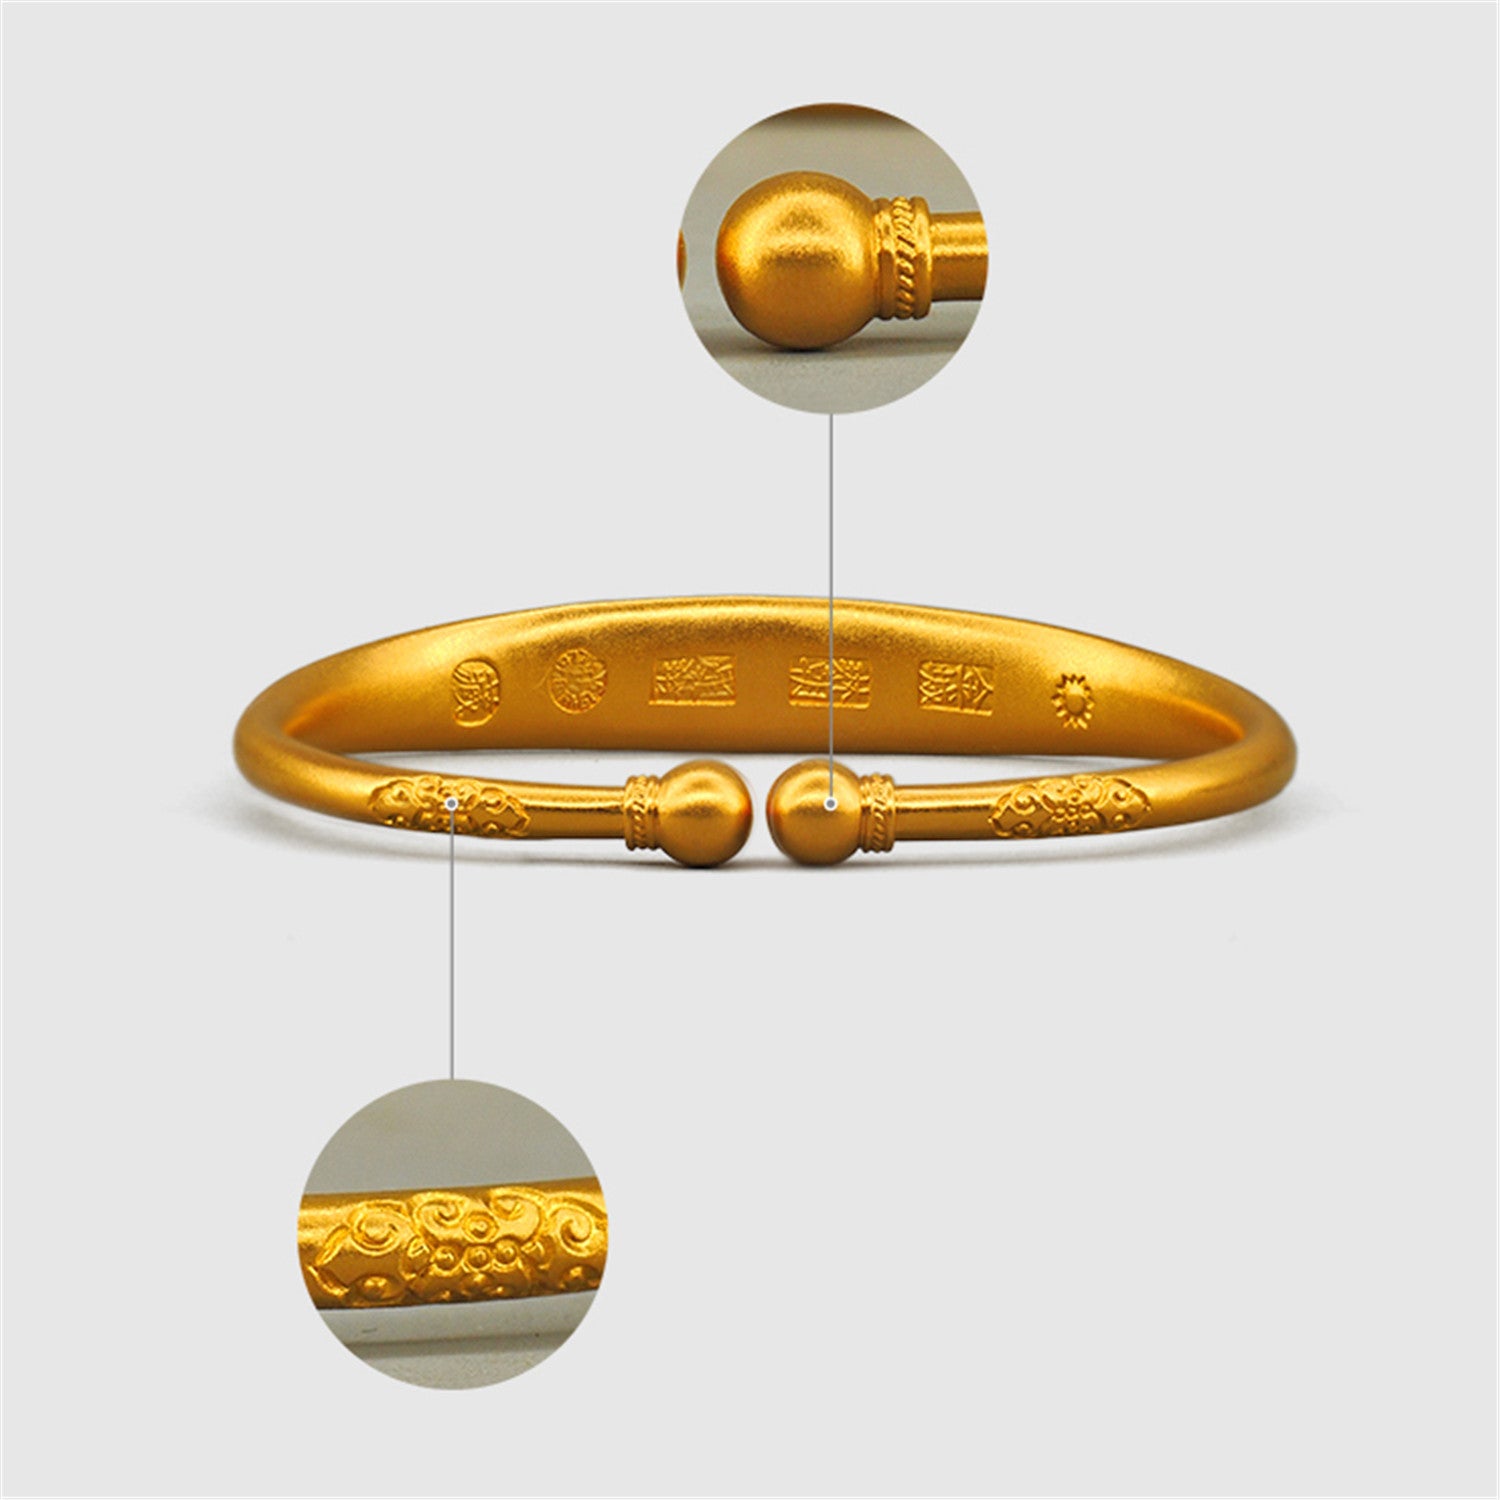 EVECOCO Full Gold Bracelet Hand Forging,Cloud Pattern,40g